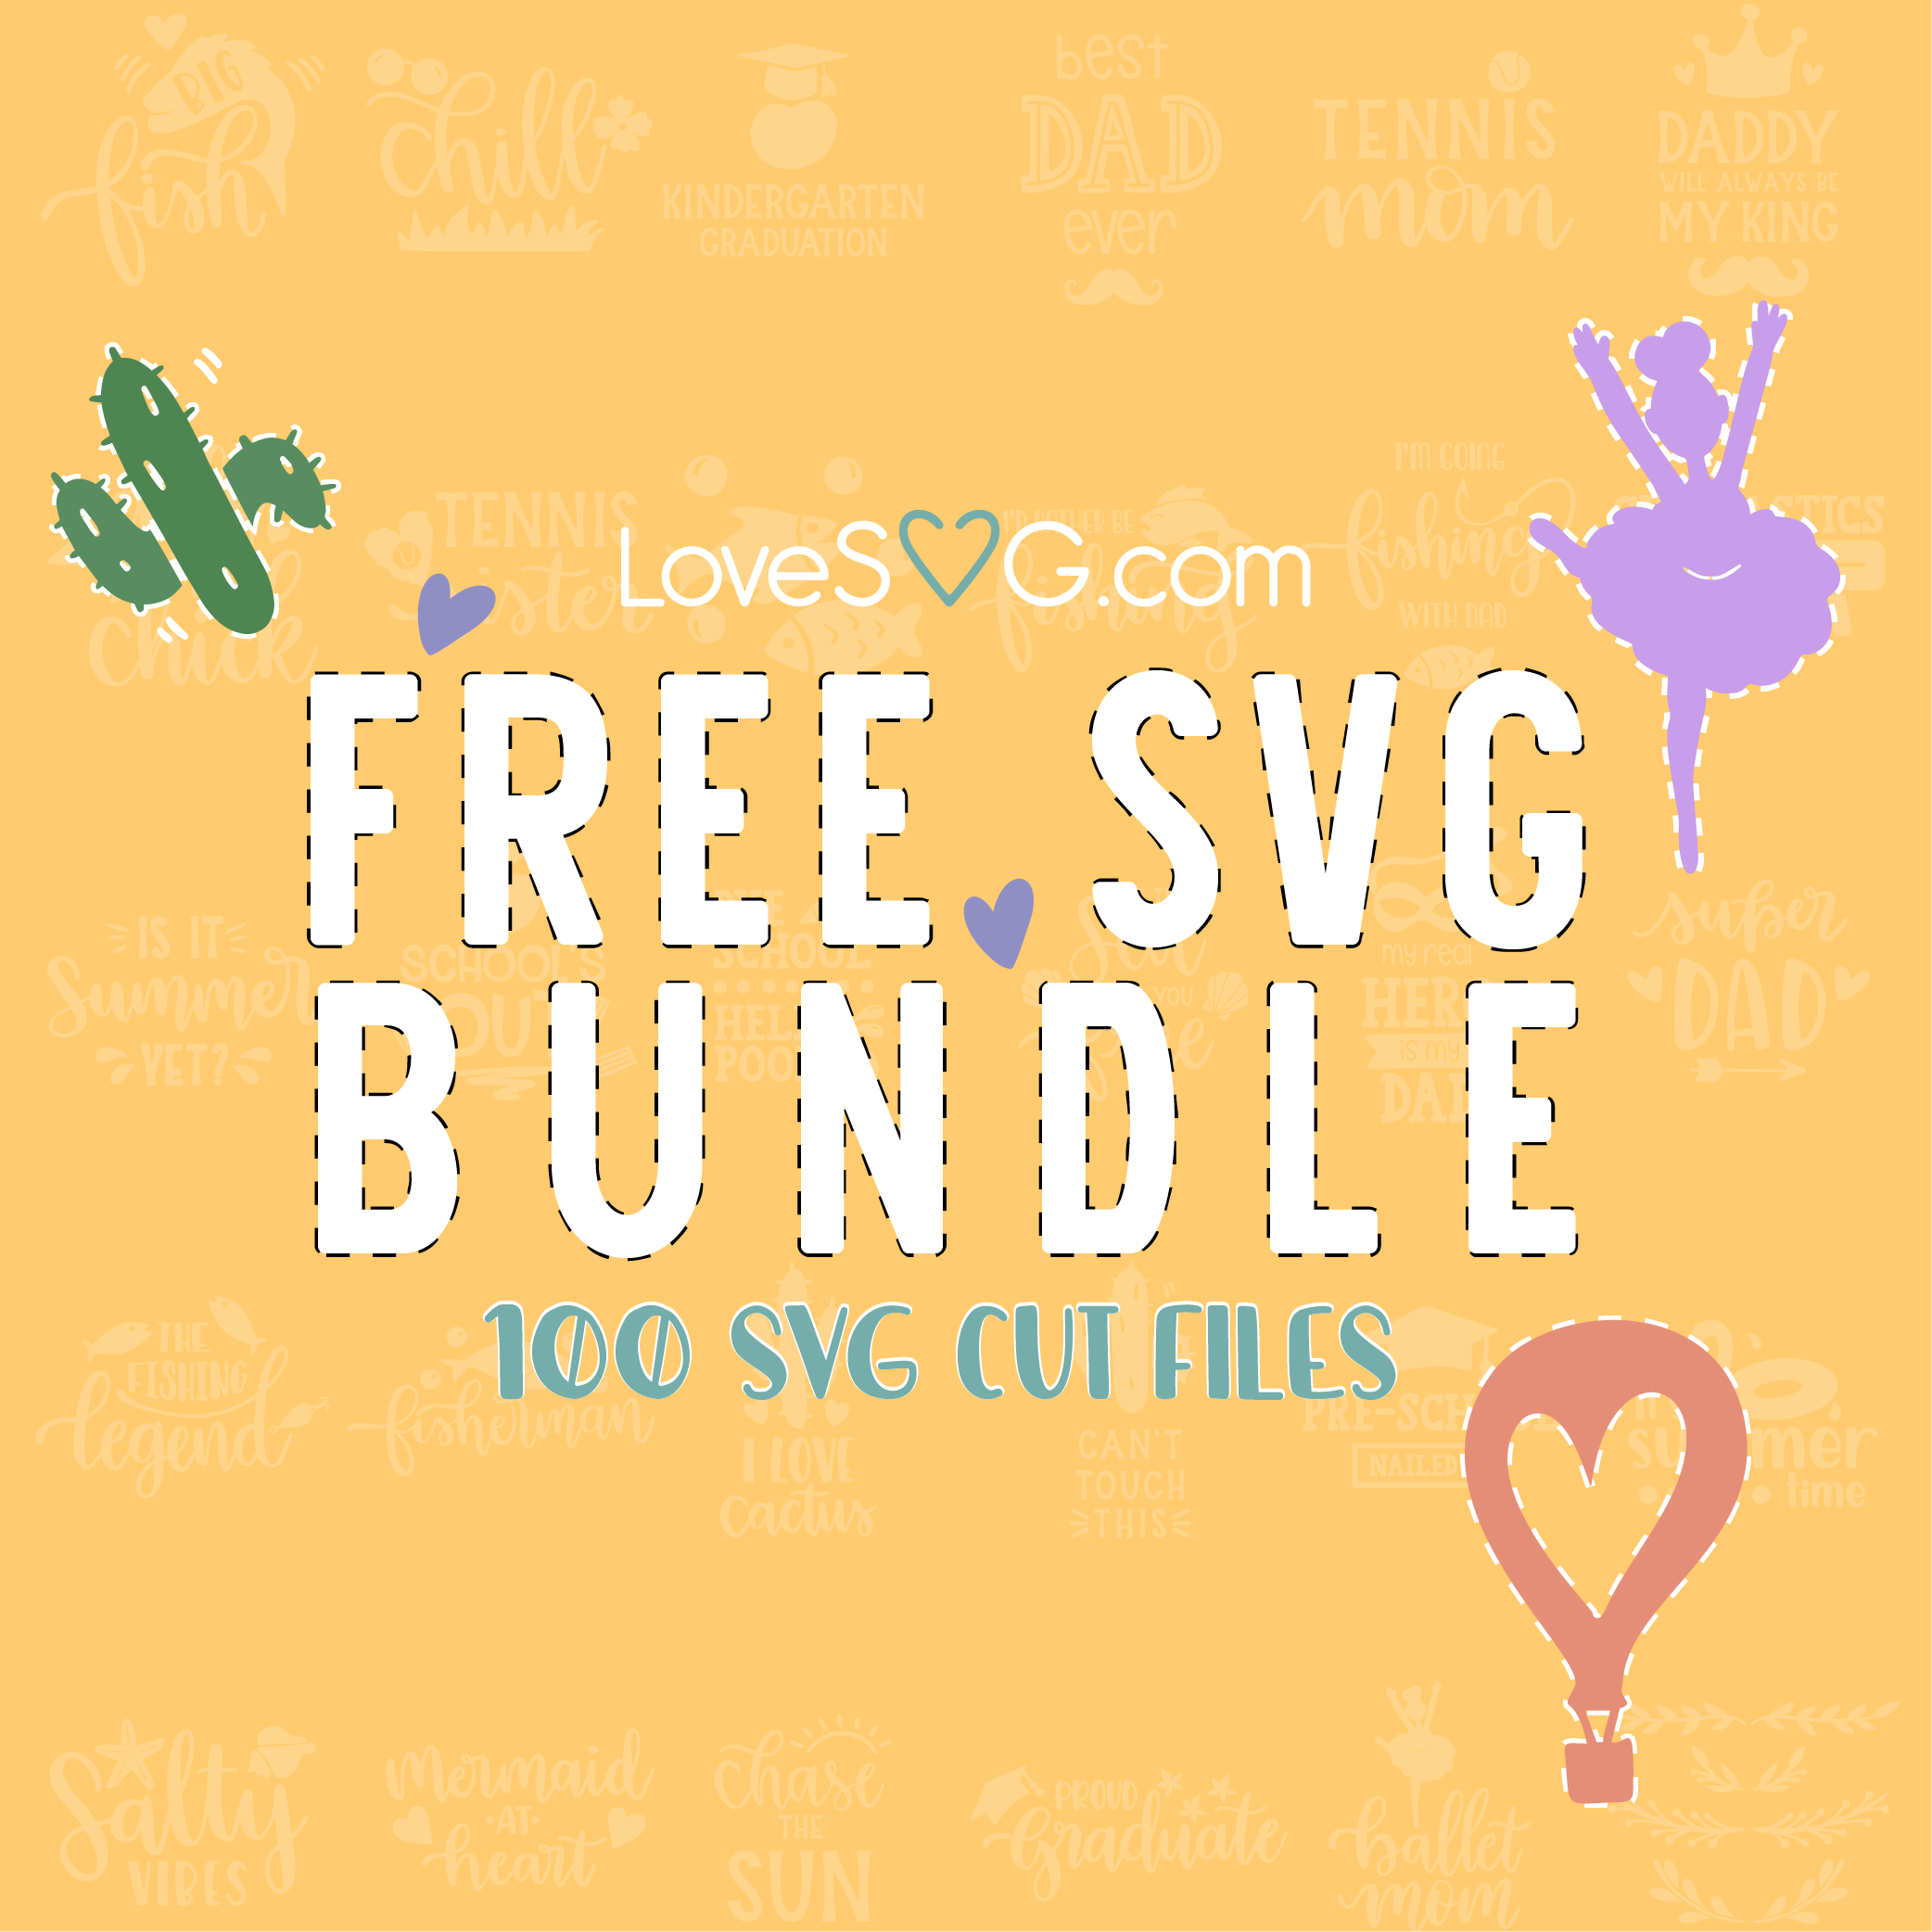 Download Free SVG Bundle Vol. 1 - Lovesvg.com